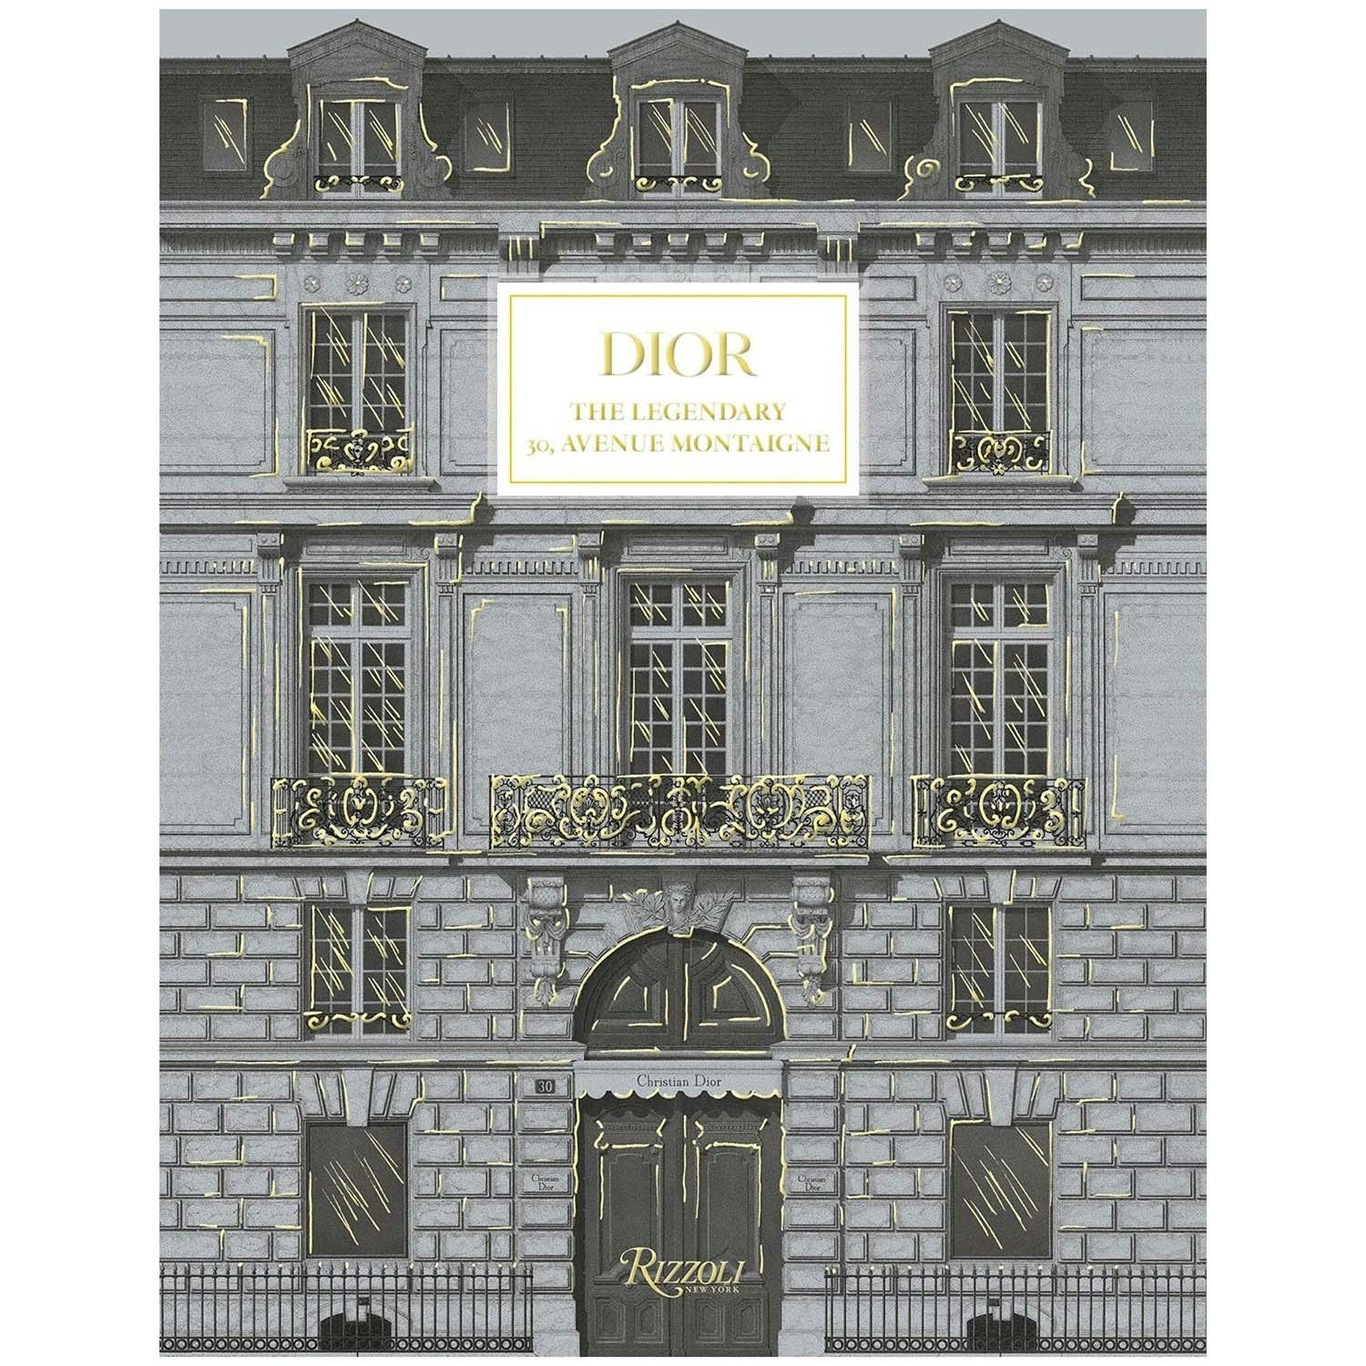 Dior: The Legendary 30, Avenue Montaigne Bok